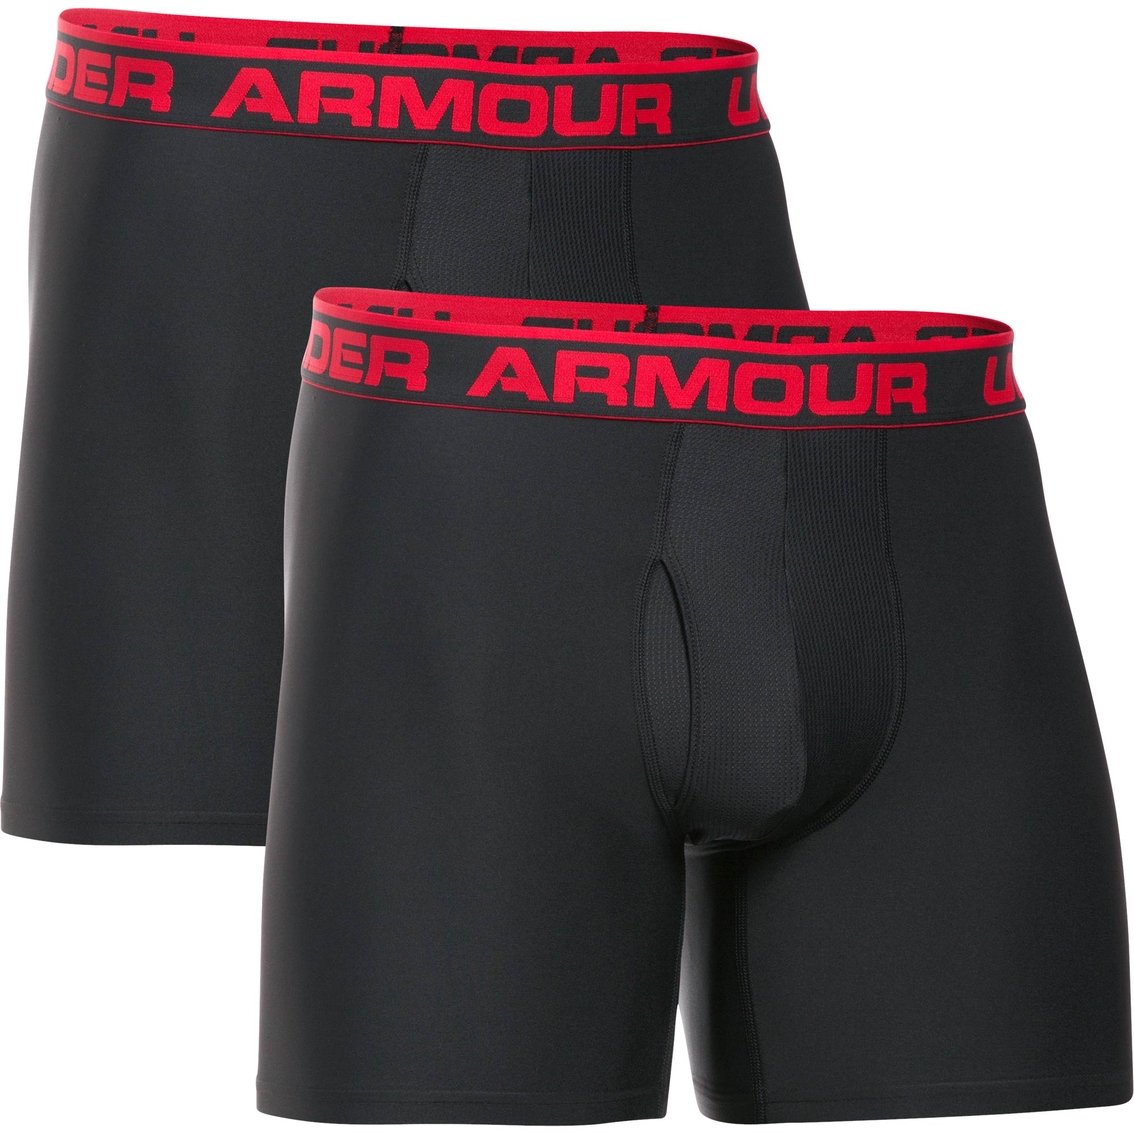 Under Armour Ua Original Series 6 In. Boxerjock Underwear, 2 Pk